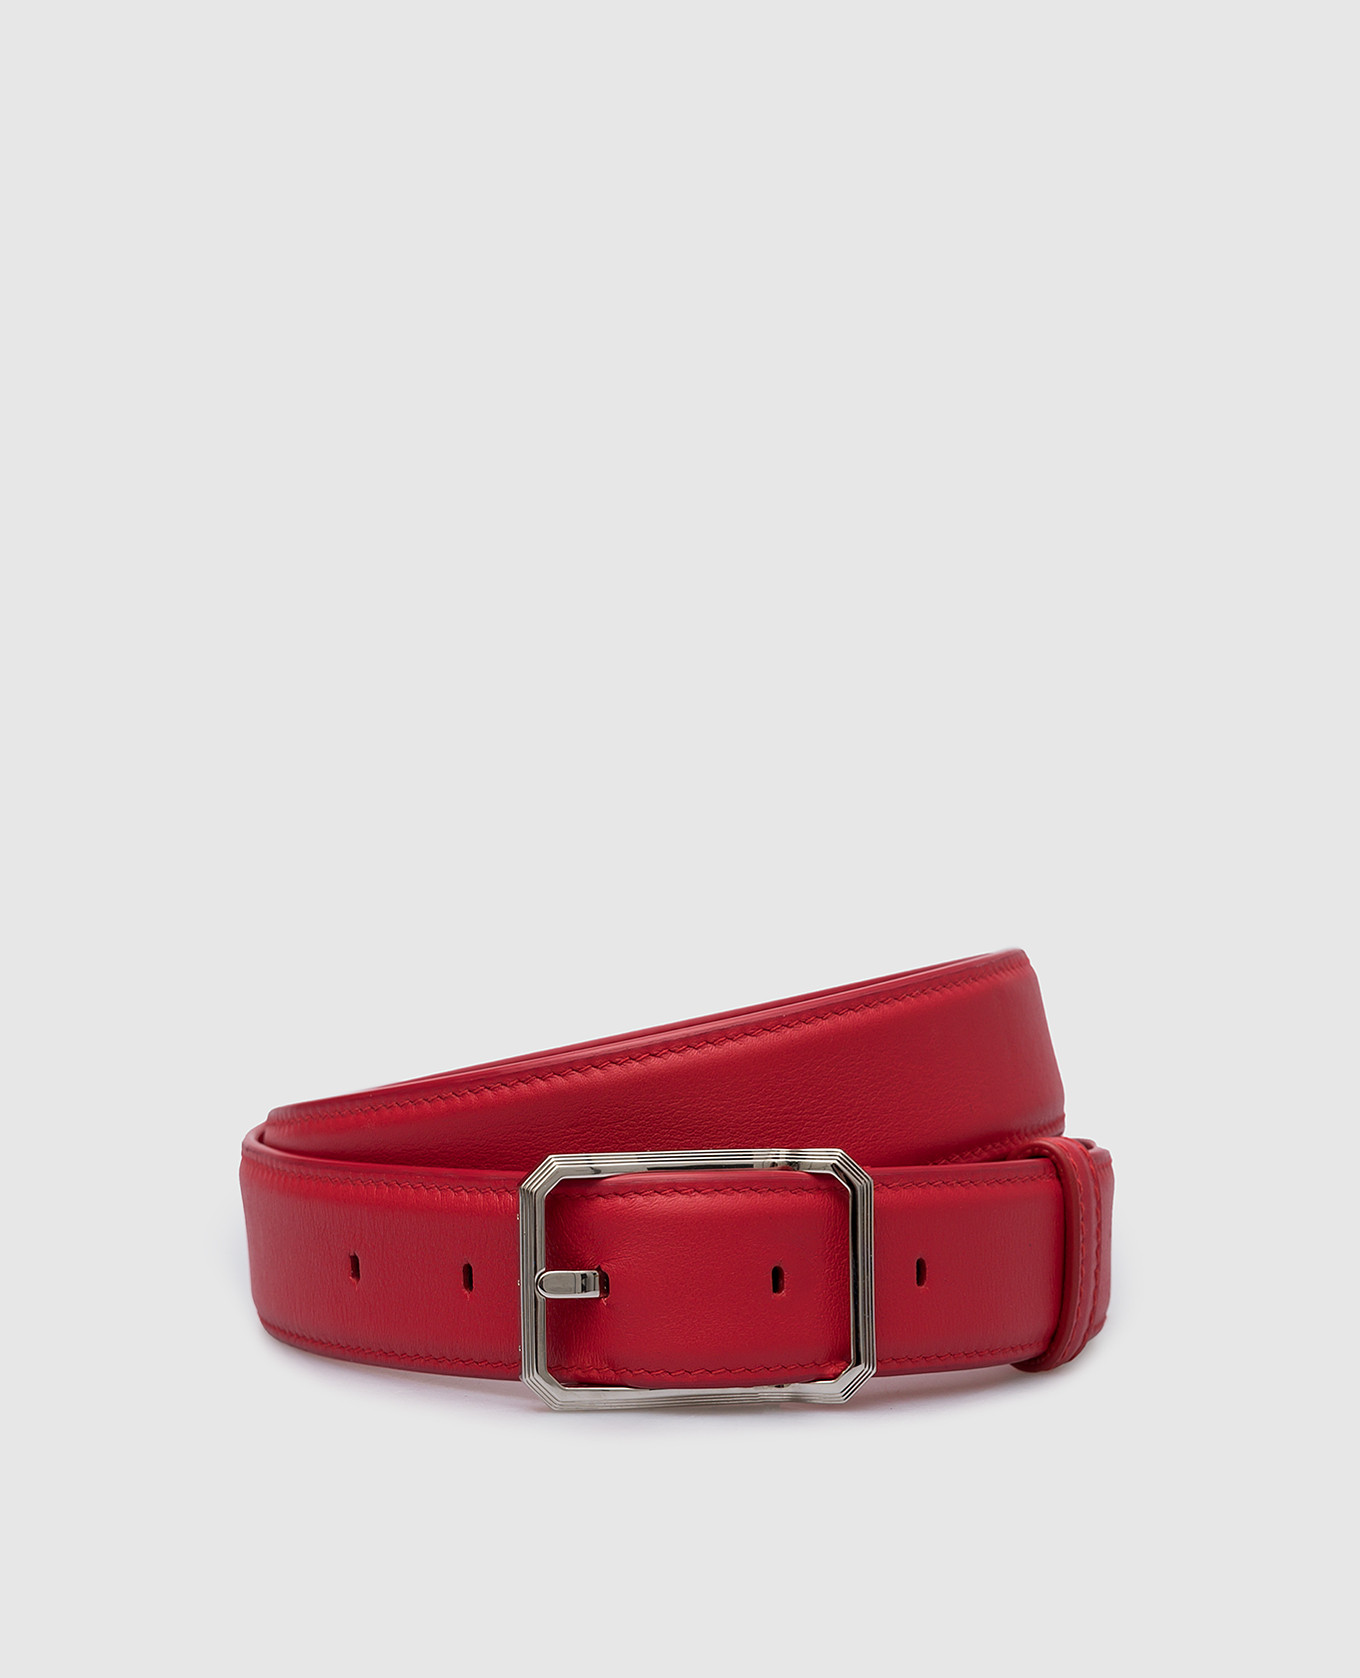 Children's red leather belt